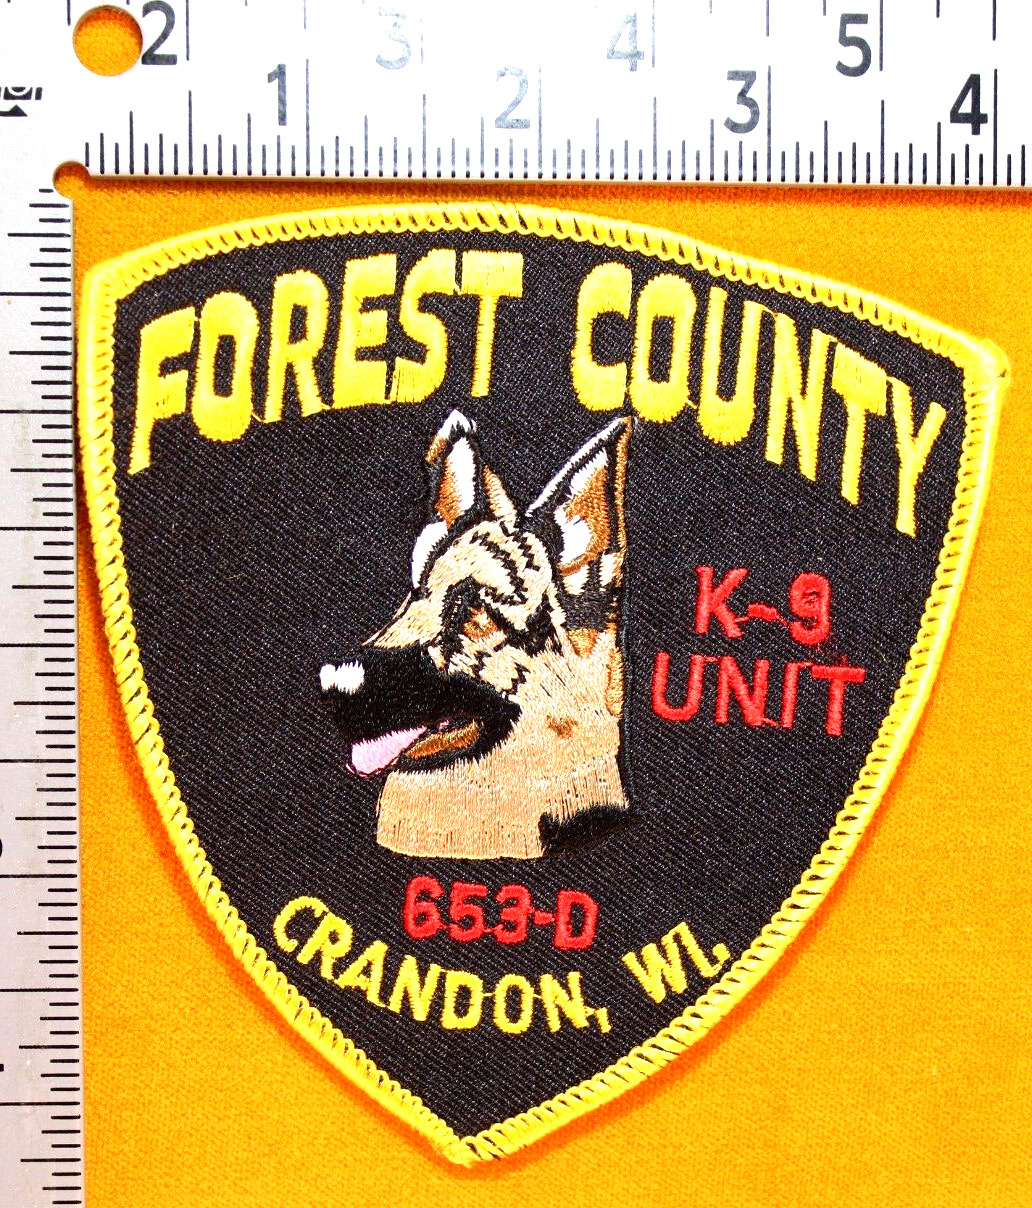 Forest County/crandon, Wisconsin Police Shoulder Patch K9